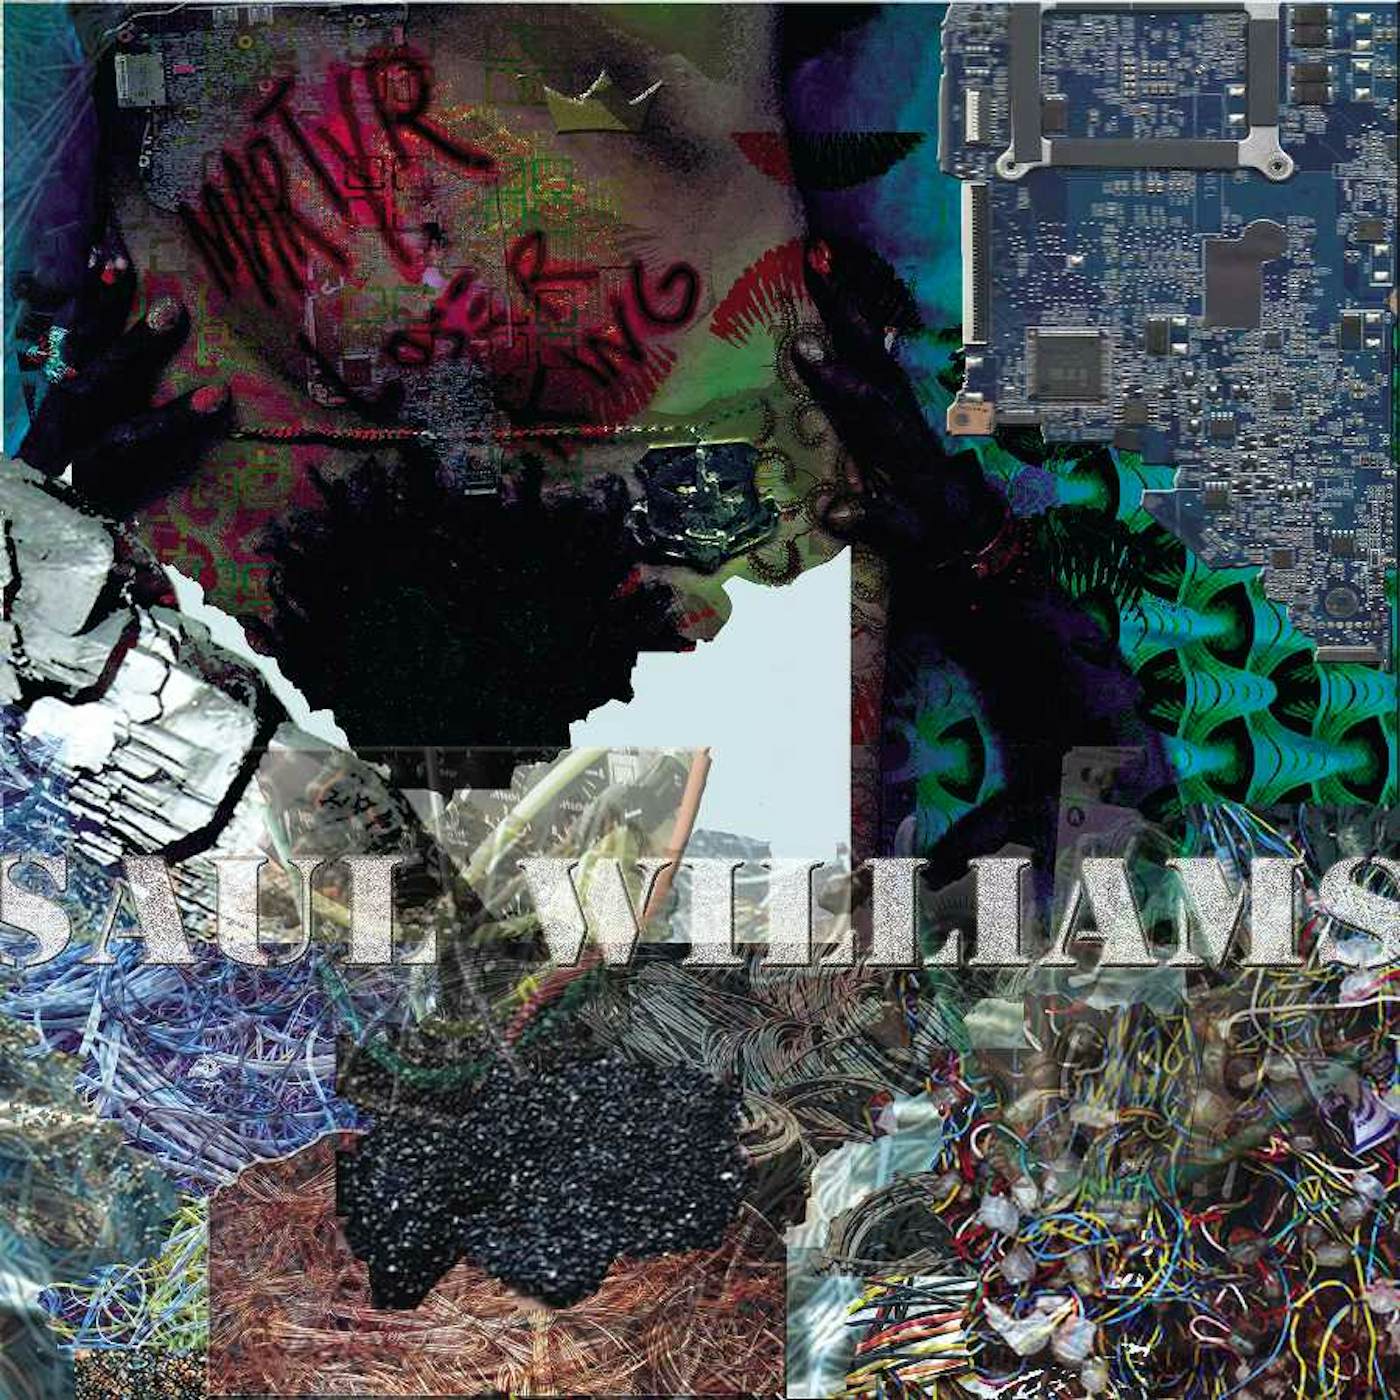 Saul Williams MartyrLoserKing Vinyl Record